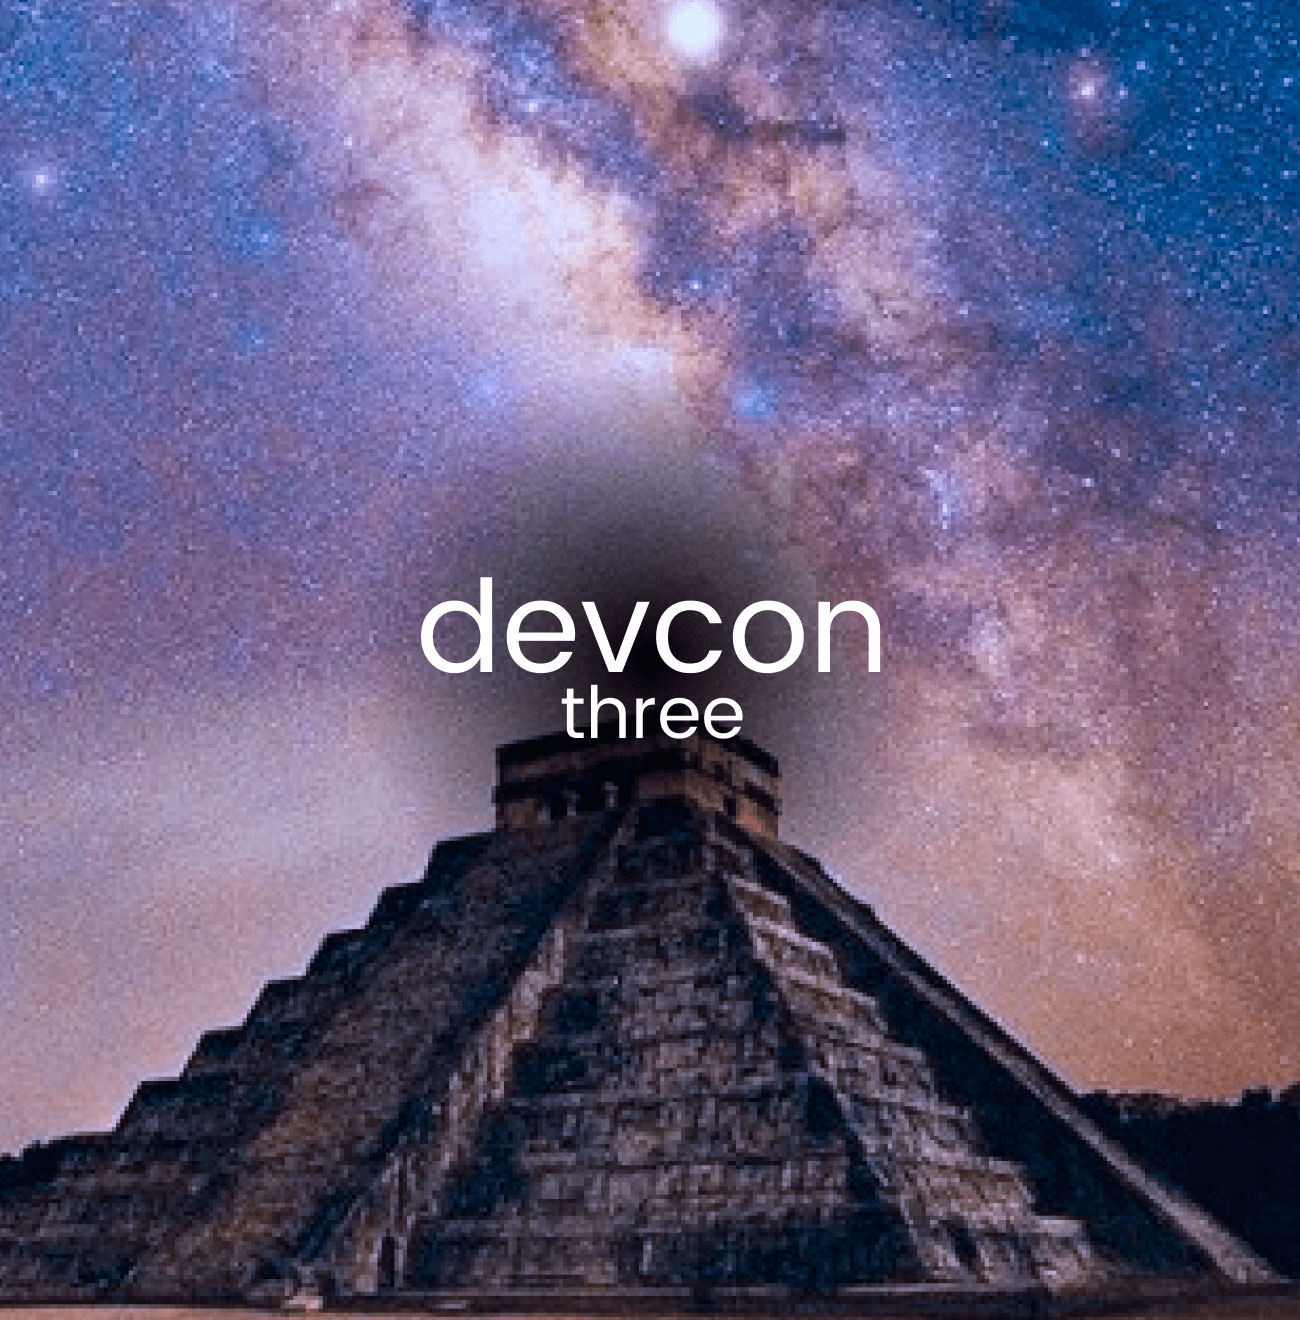 Devcon 3 Devcon playlist